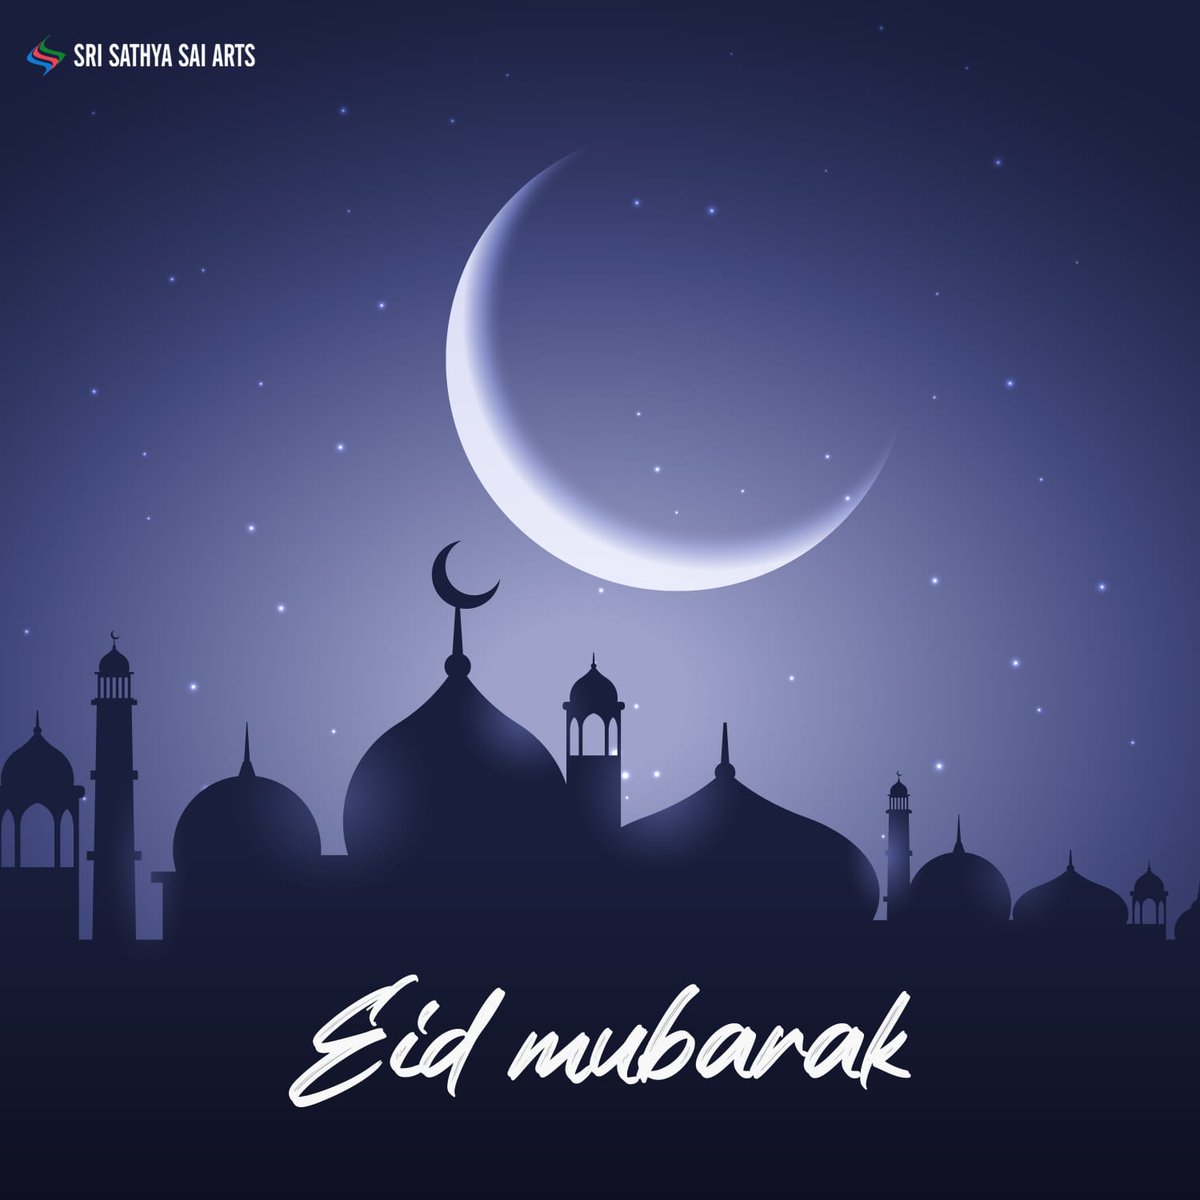 Eid Mubarak! May the spirit of Ramadan continue to illuminate your path and bring you peace and fulfillment. #EidMubarak #Ramadan